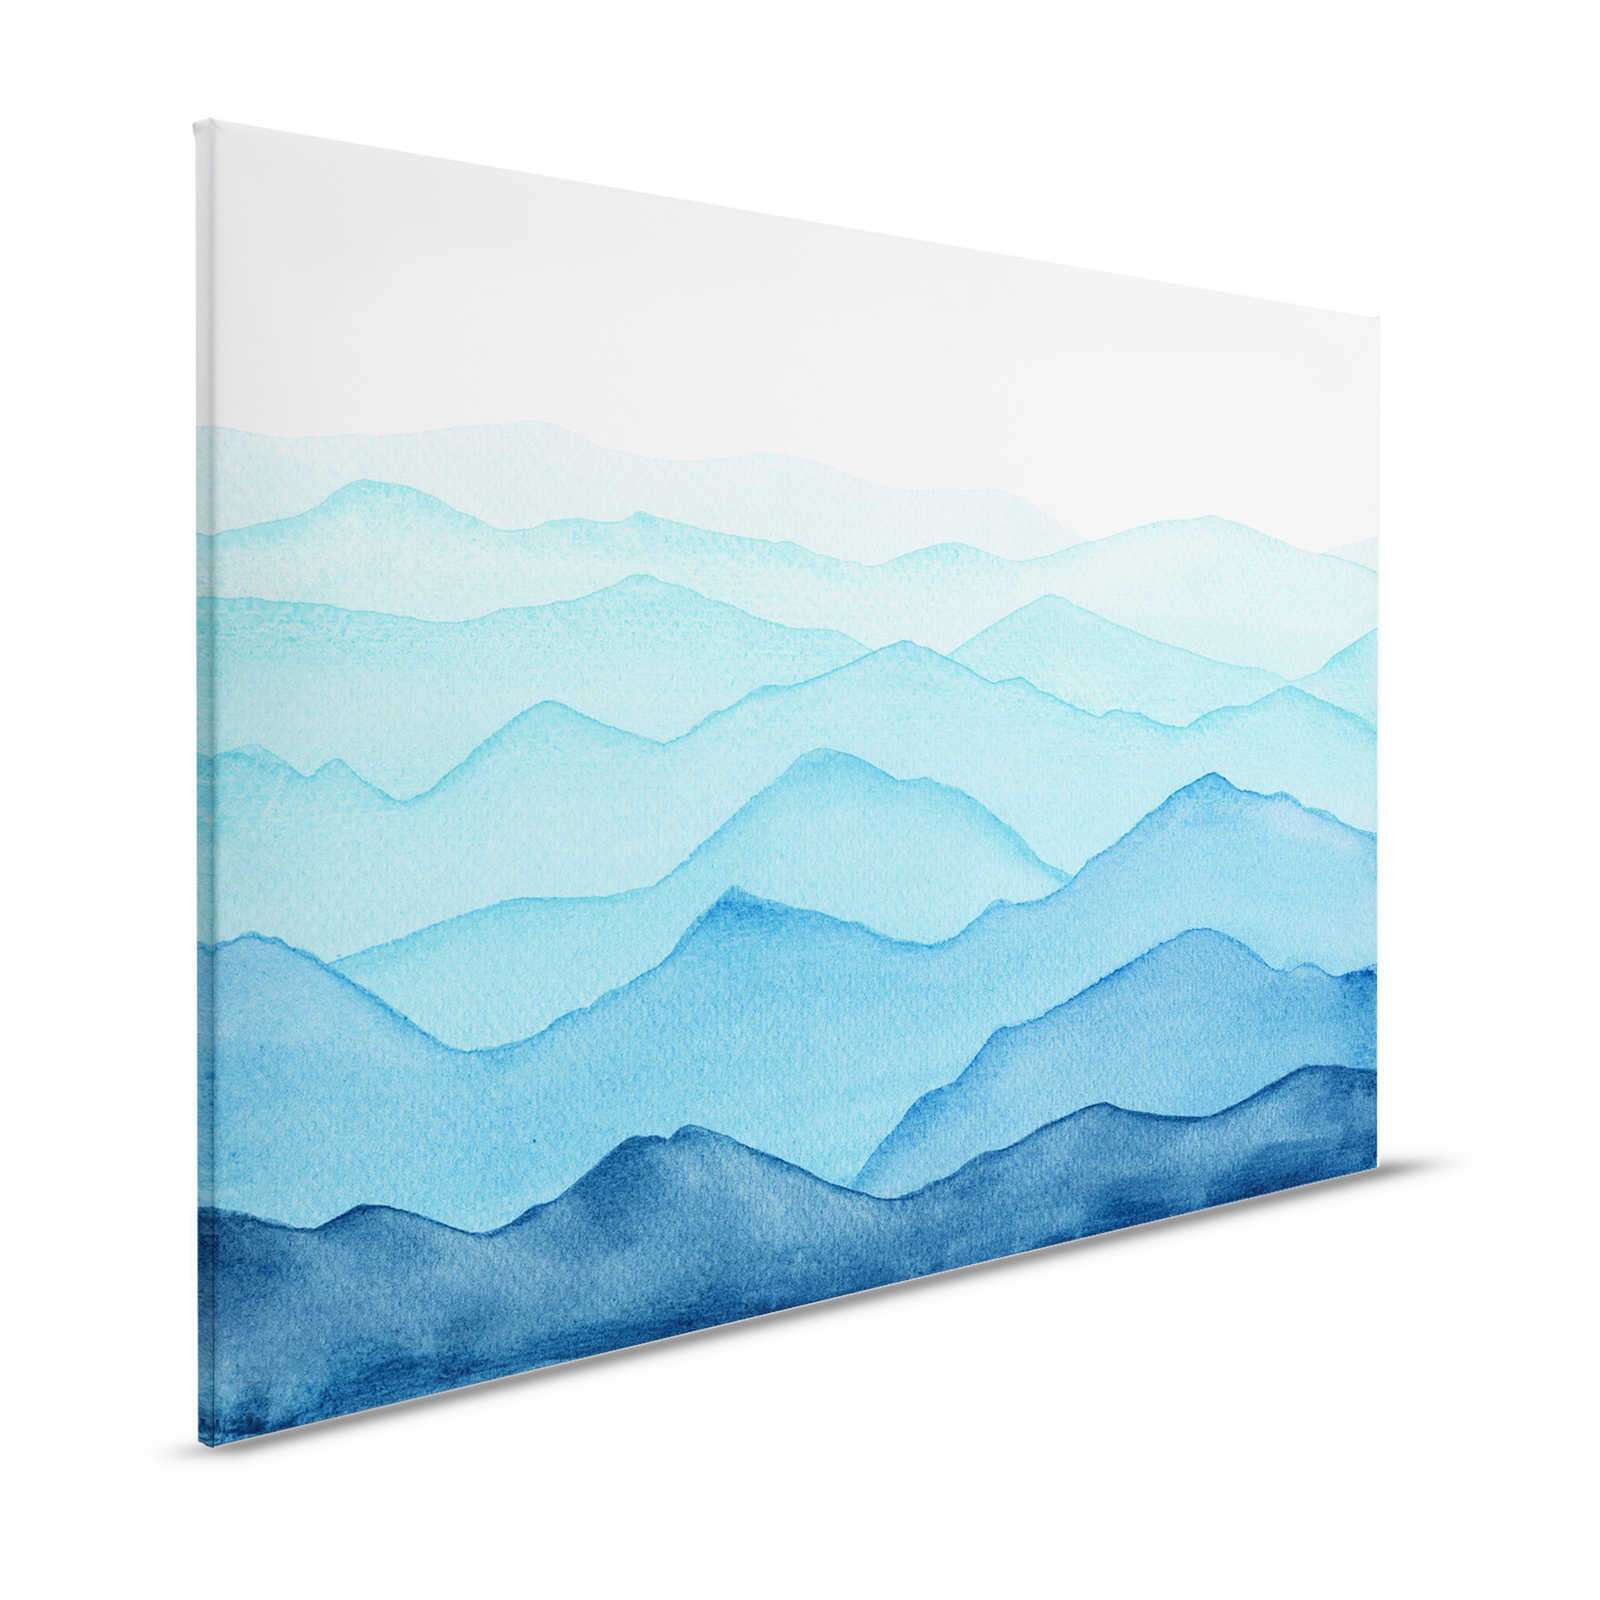 Lienzo Mar con olas en acuarela - 120 cm x 80 cm
